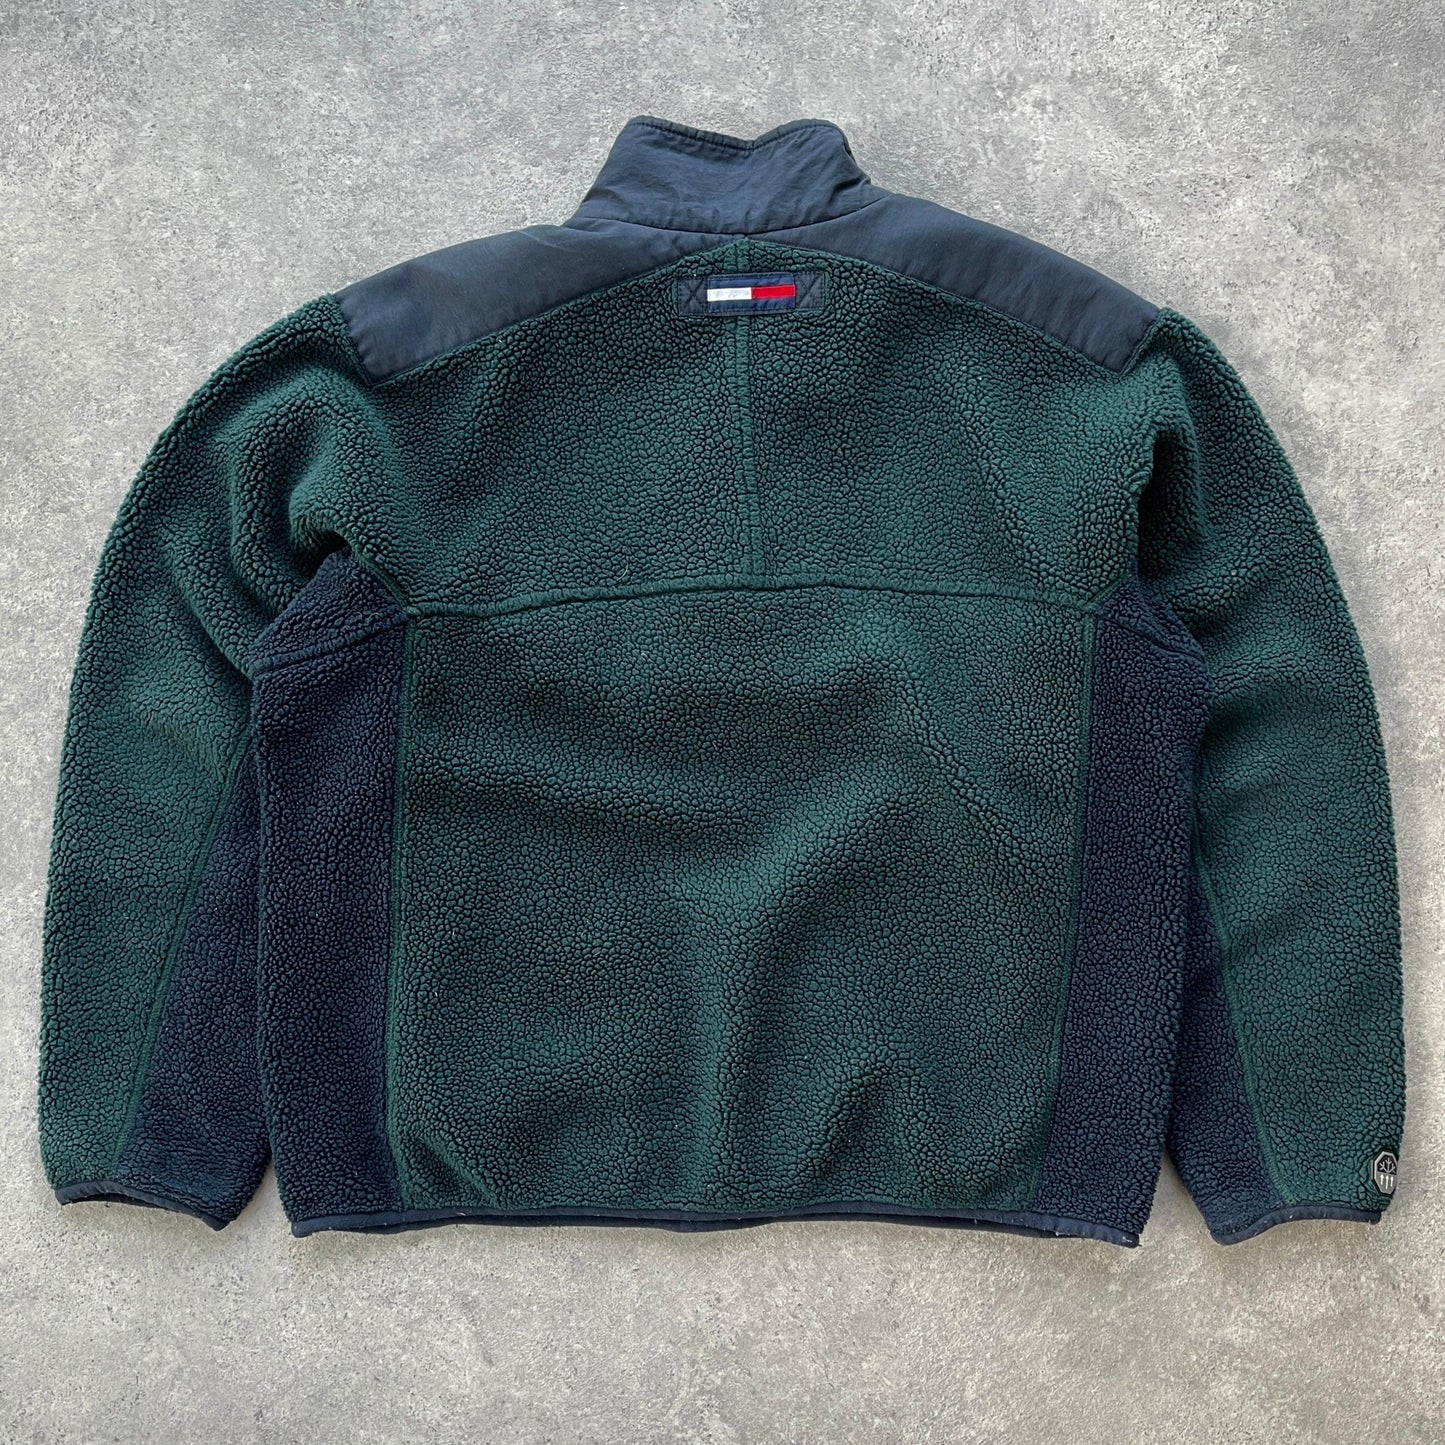 Tommy Hilfiger RARE 1990s 1/4 zip technical sherpa fleece jacket (XL) - Known Source